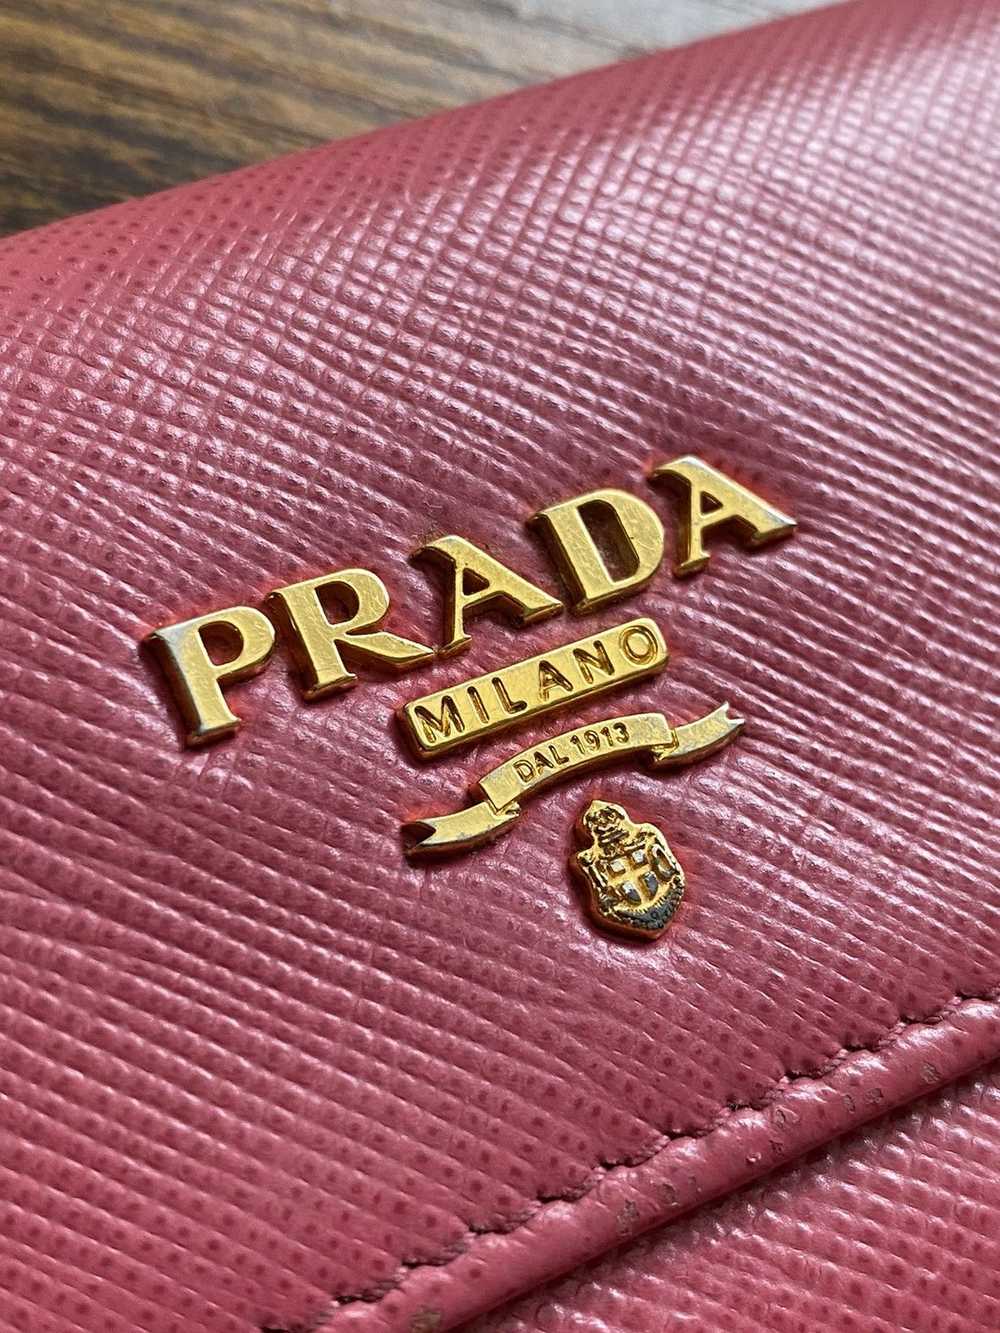 Prada Prada Saffiano metal leather key holder - image 3